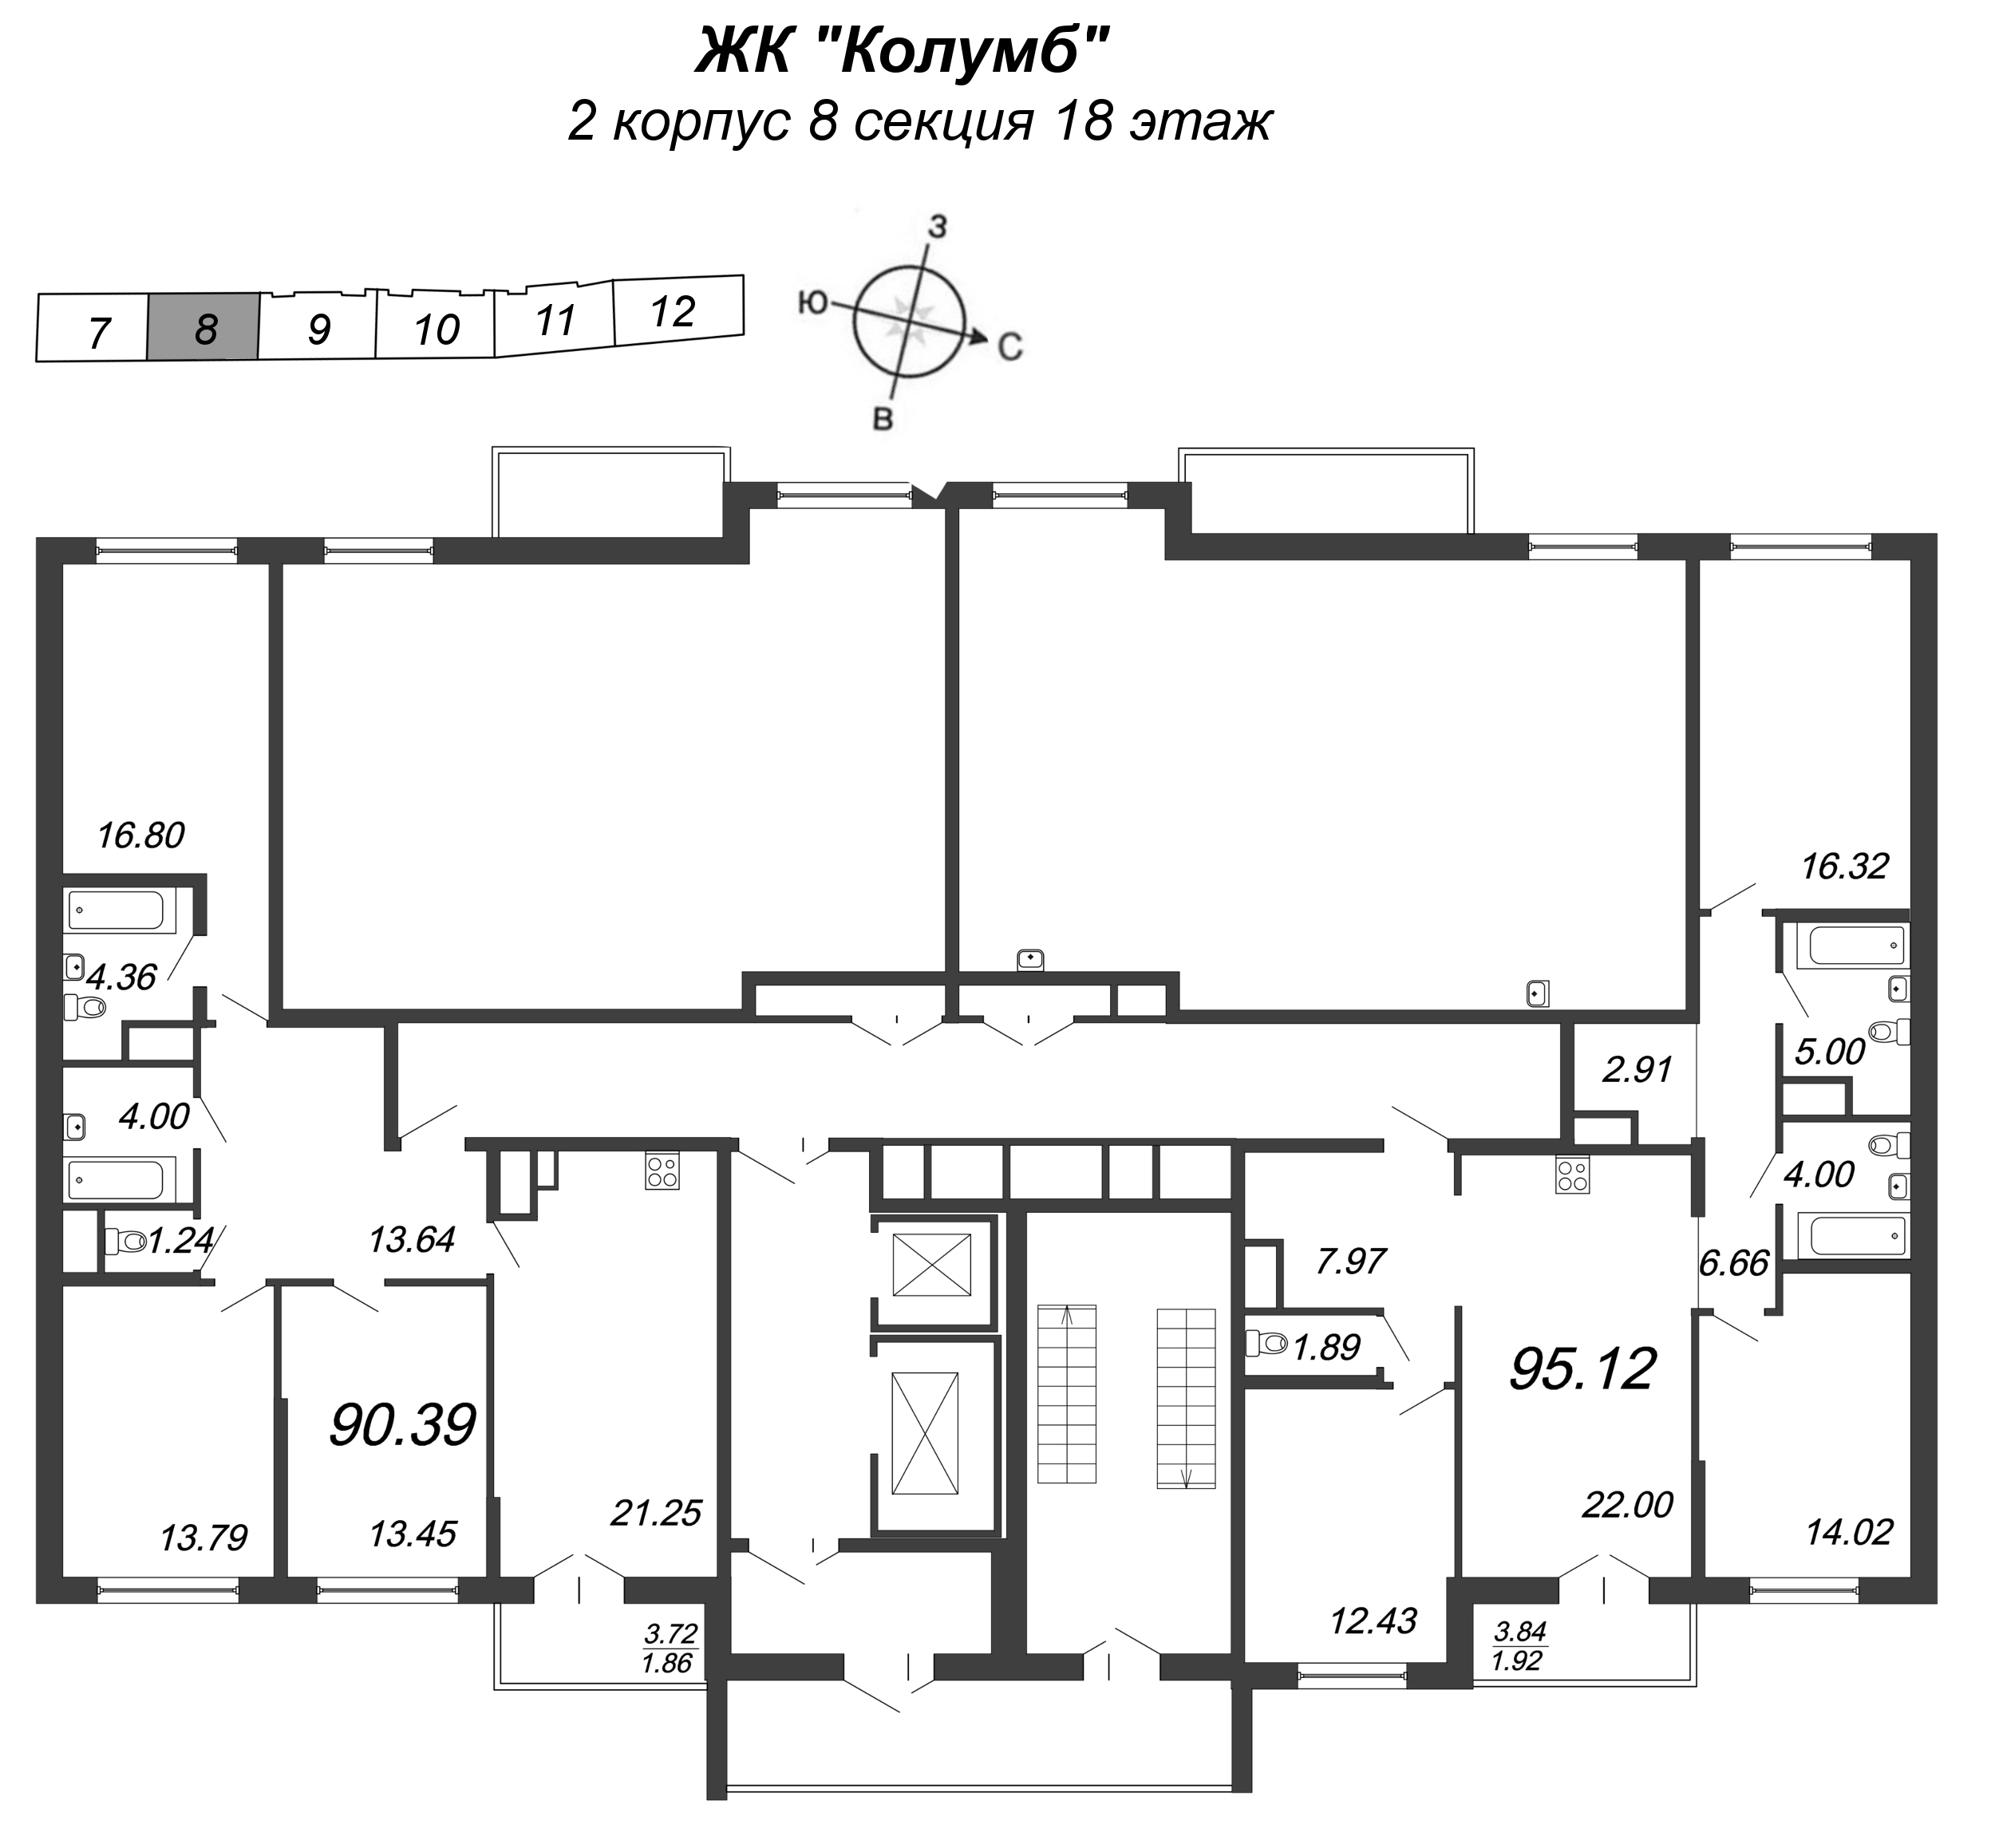 4-комнатная (Евро) квартира, 95.12 м² - планировка этажа